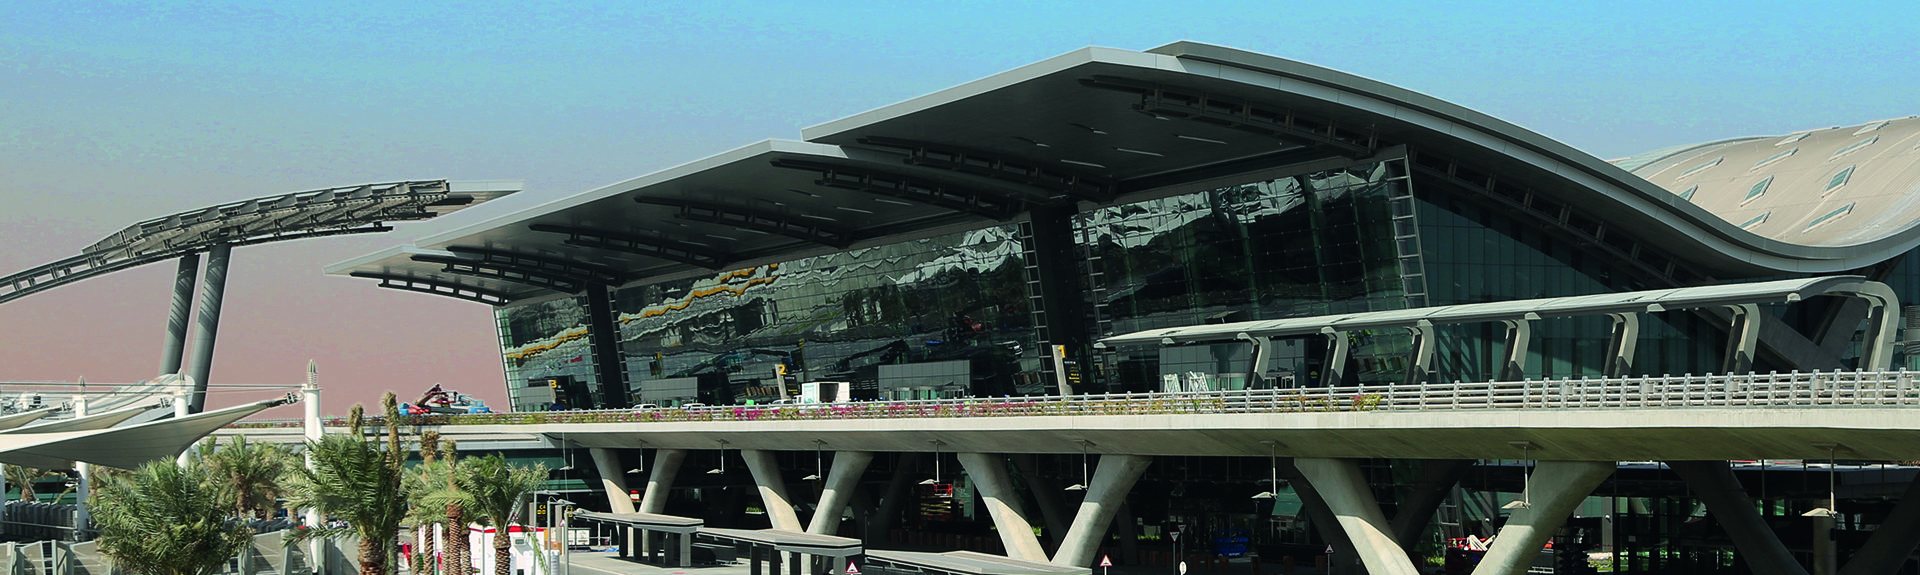 Hamad Airport Expansion, Doha, Qatar - e-architect